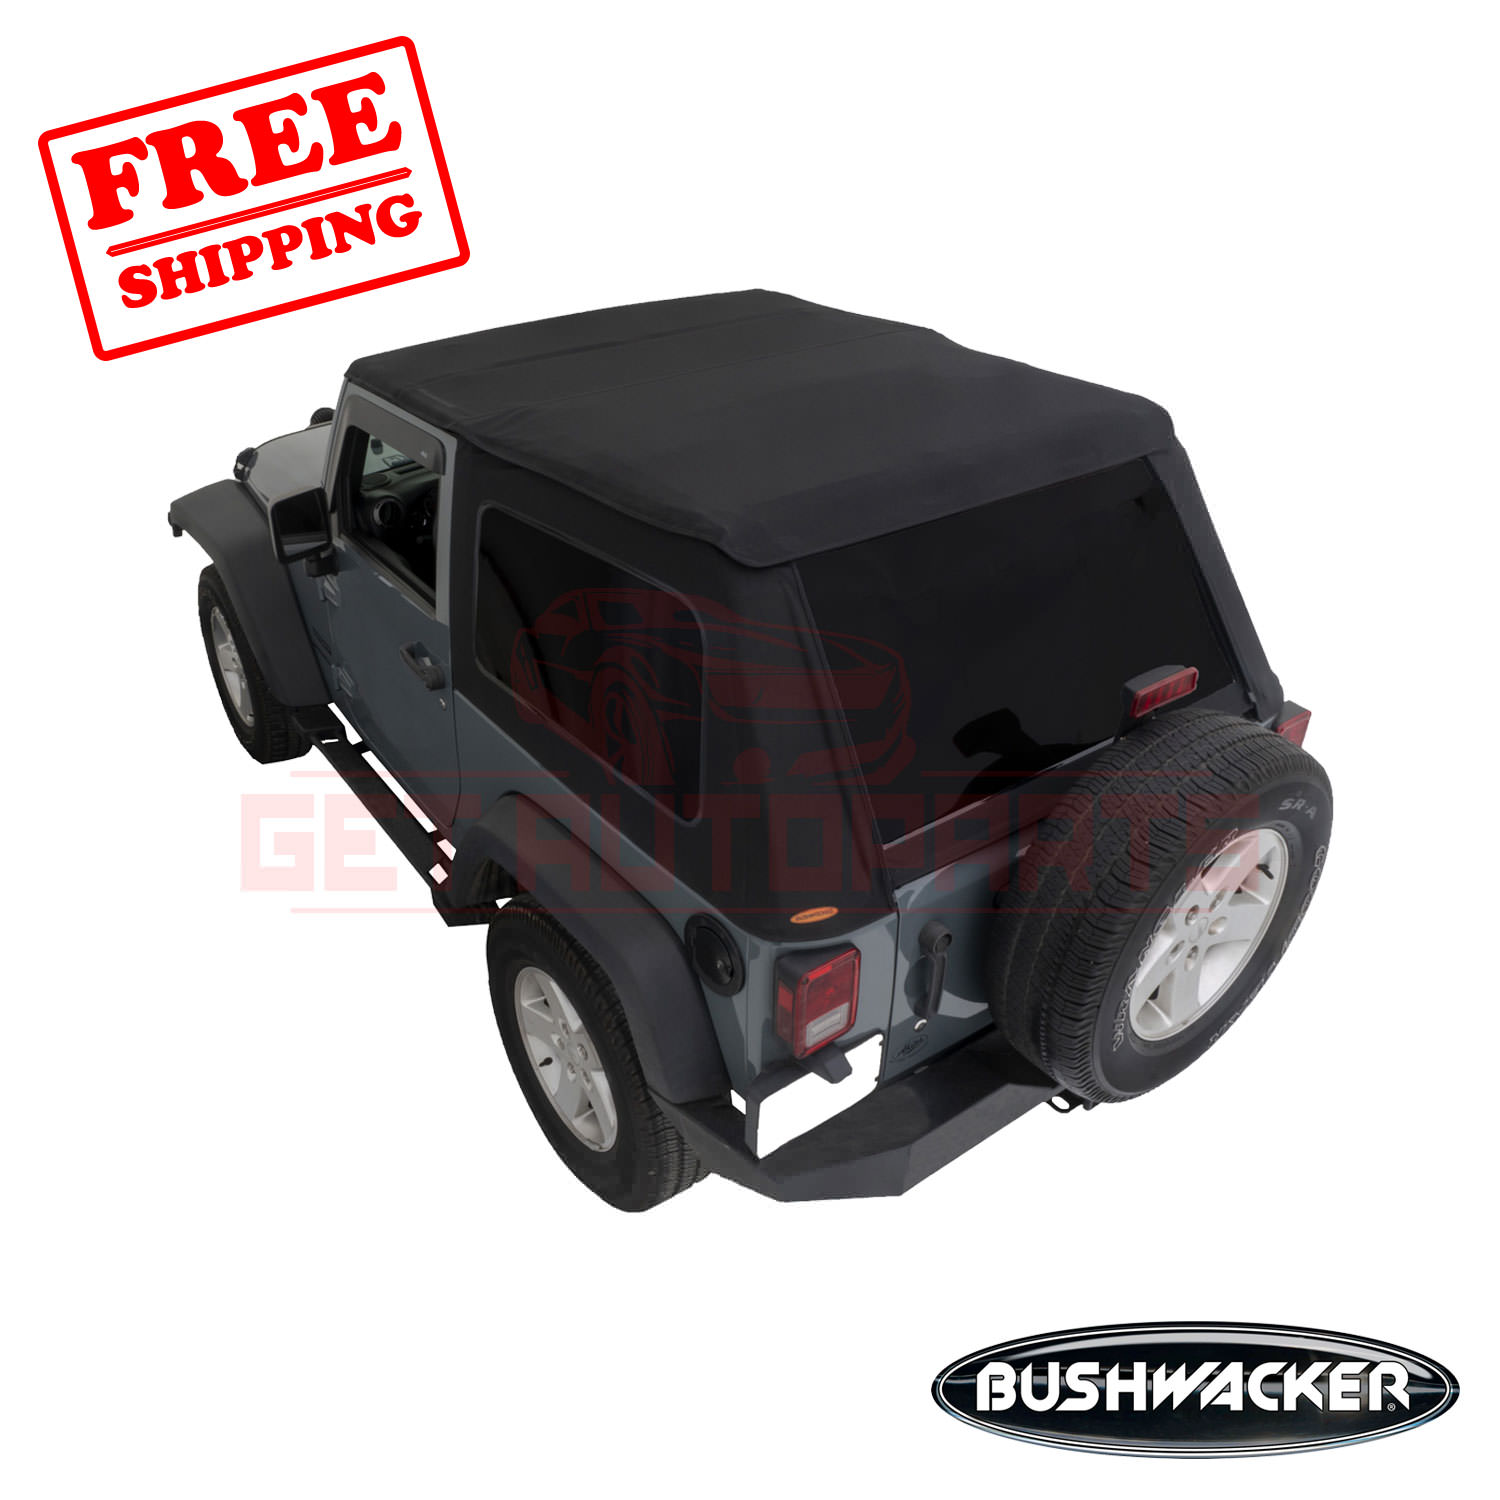 Bushwacker Soft Top for Jeep Wrangler JK 2018-18 657896964093 | eBay